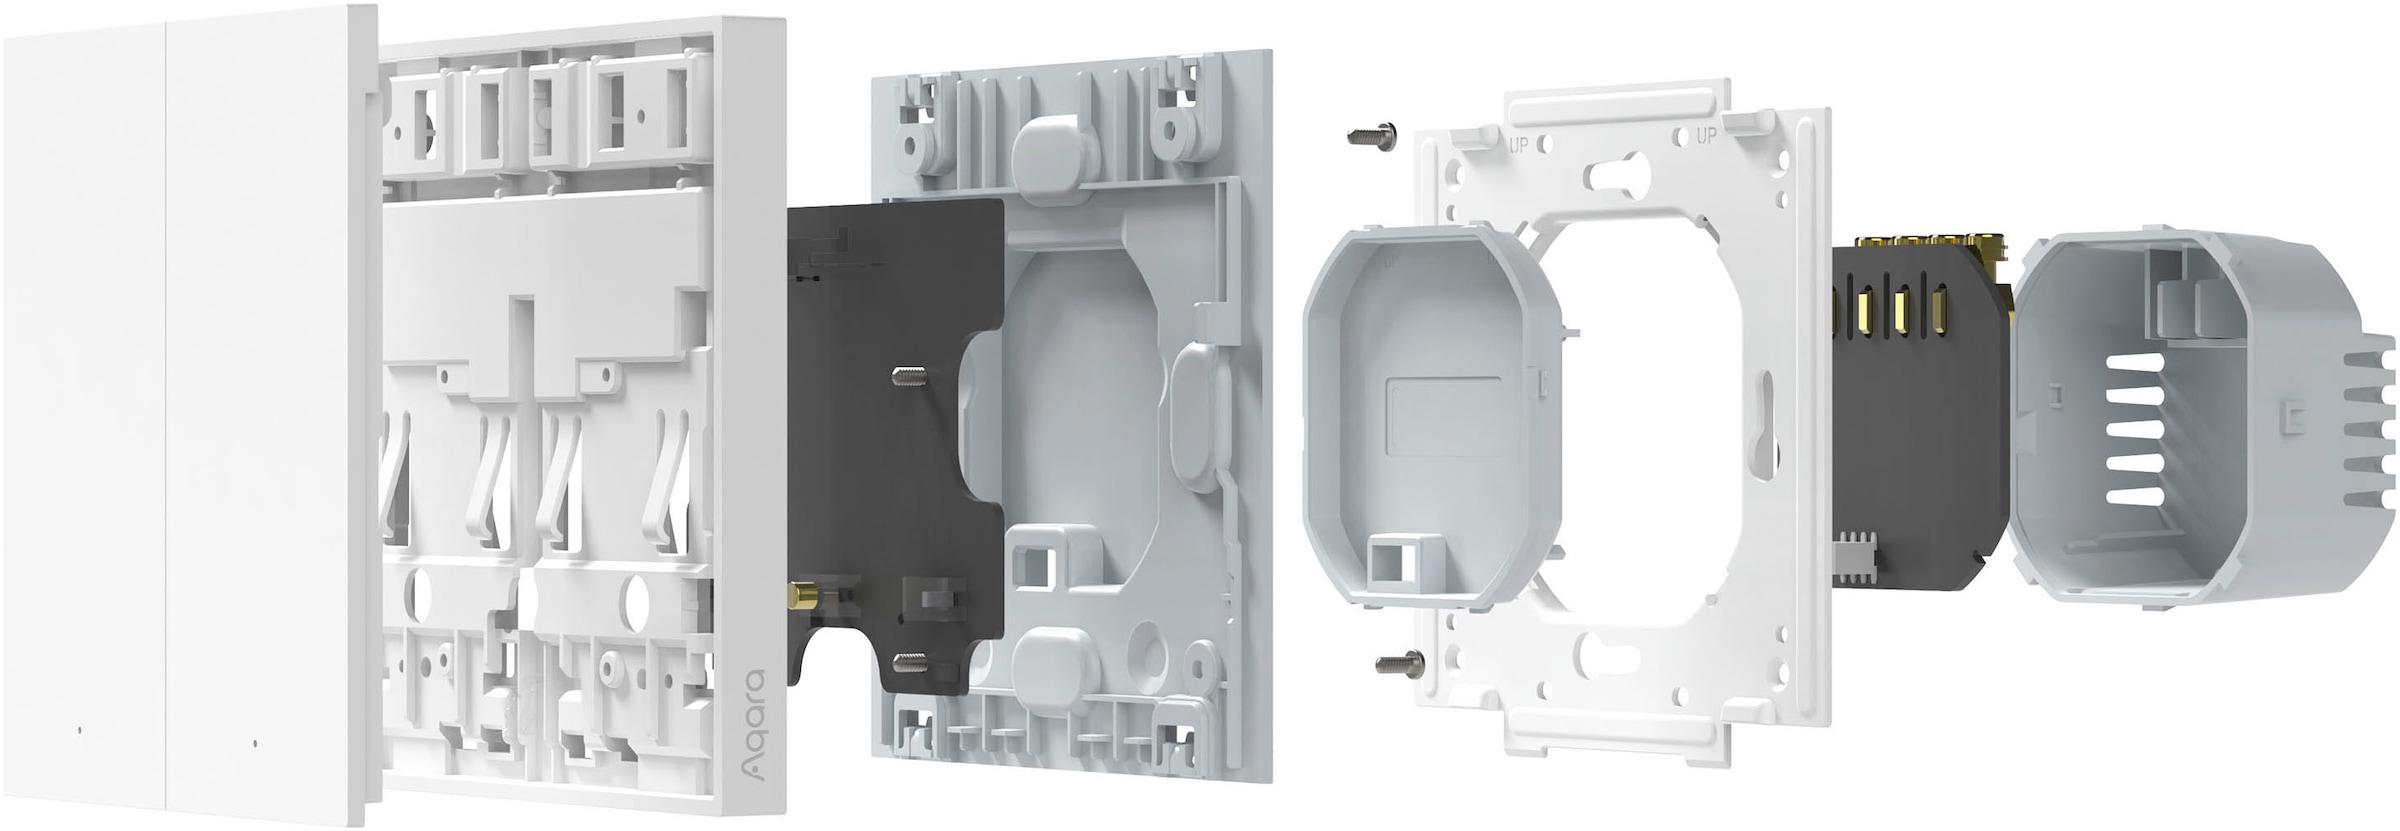 Aqara Lichtschalter »Smart Wall Switch H1 (No Neutral, Single Rocker)«